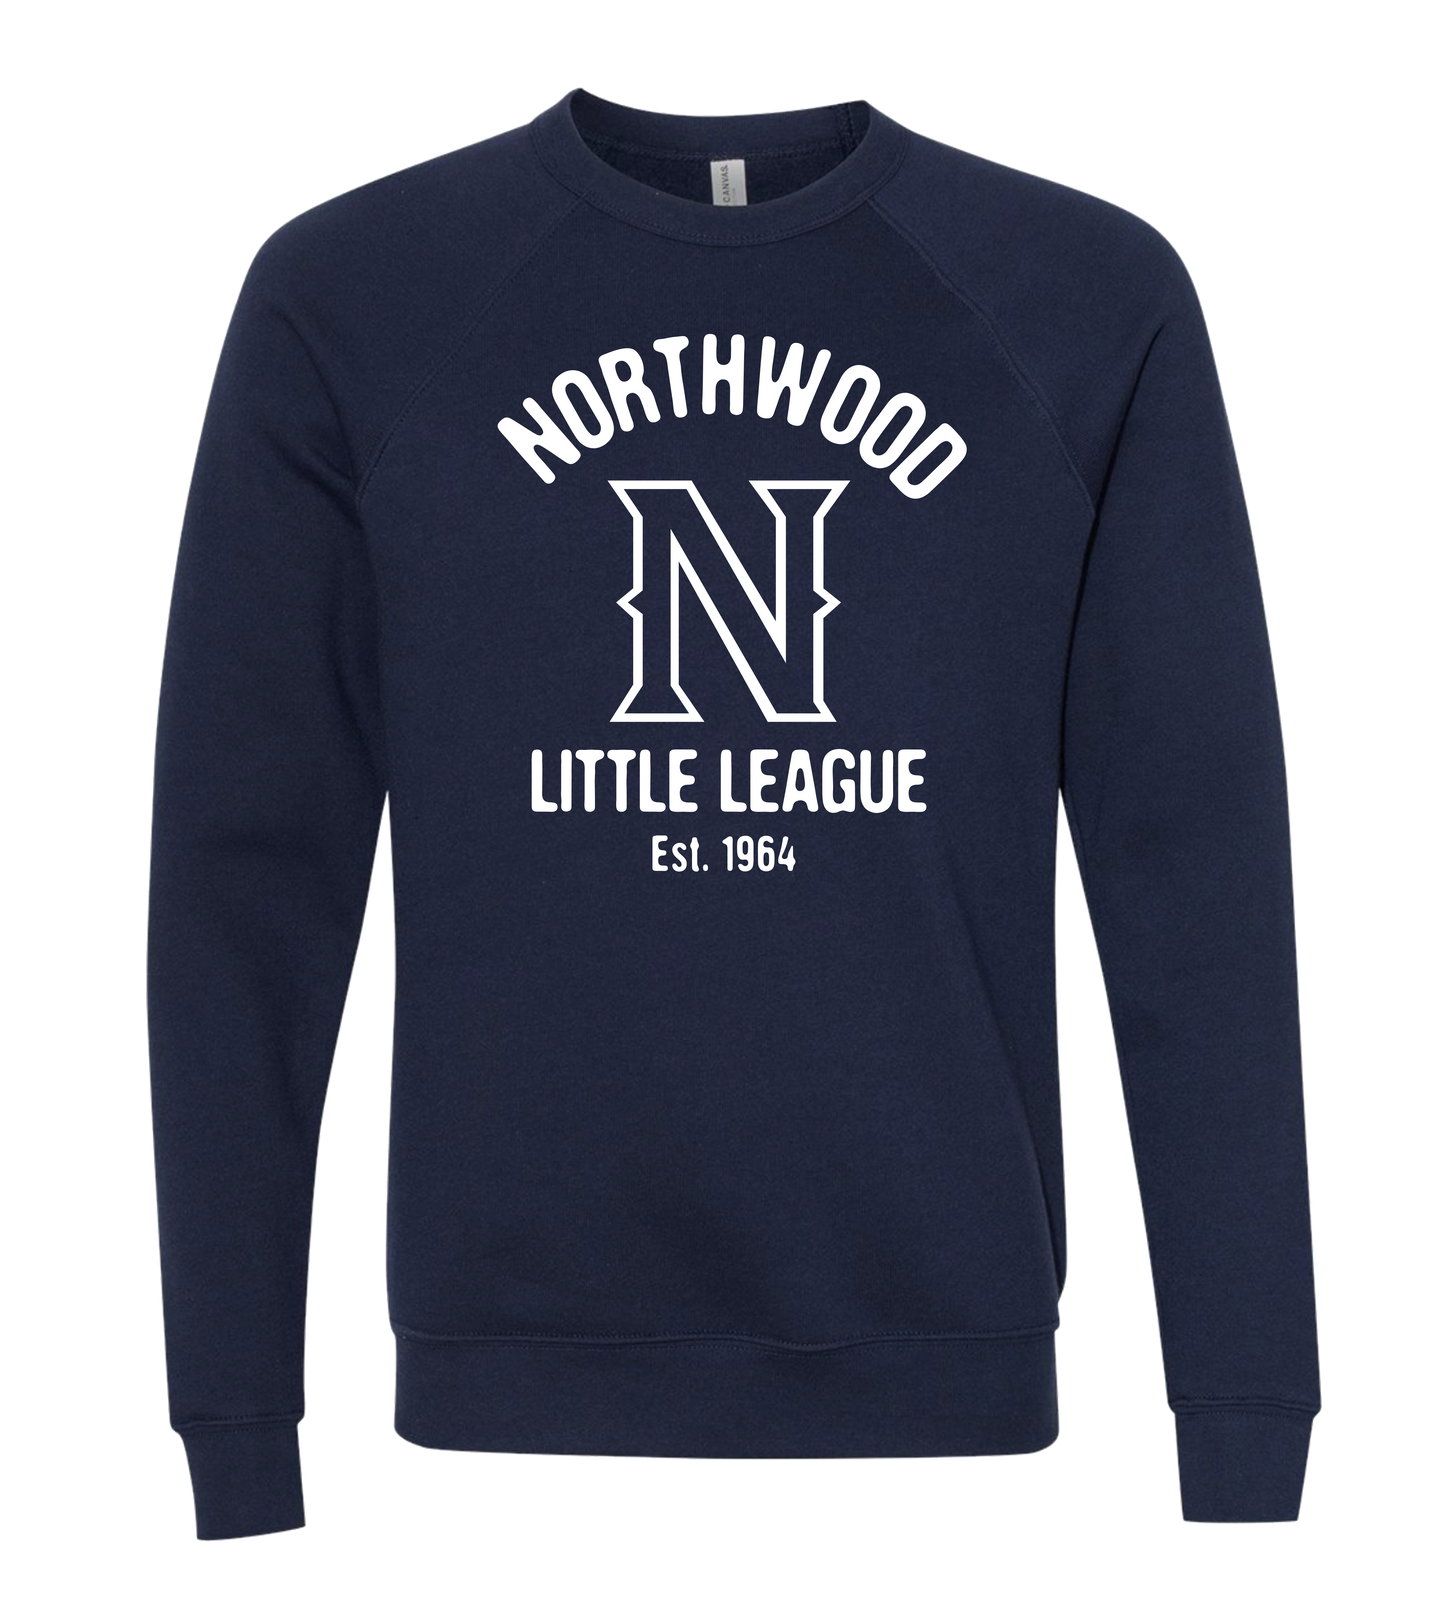 Northwood Little League Bella Crewneck Unisex Adult